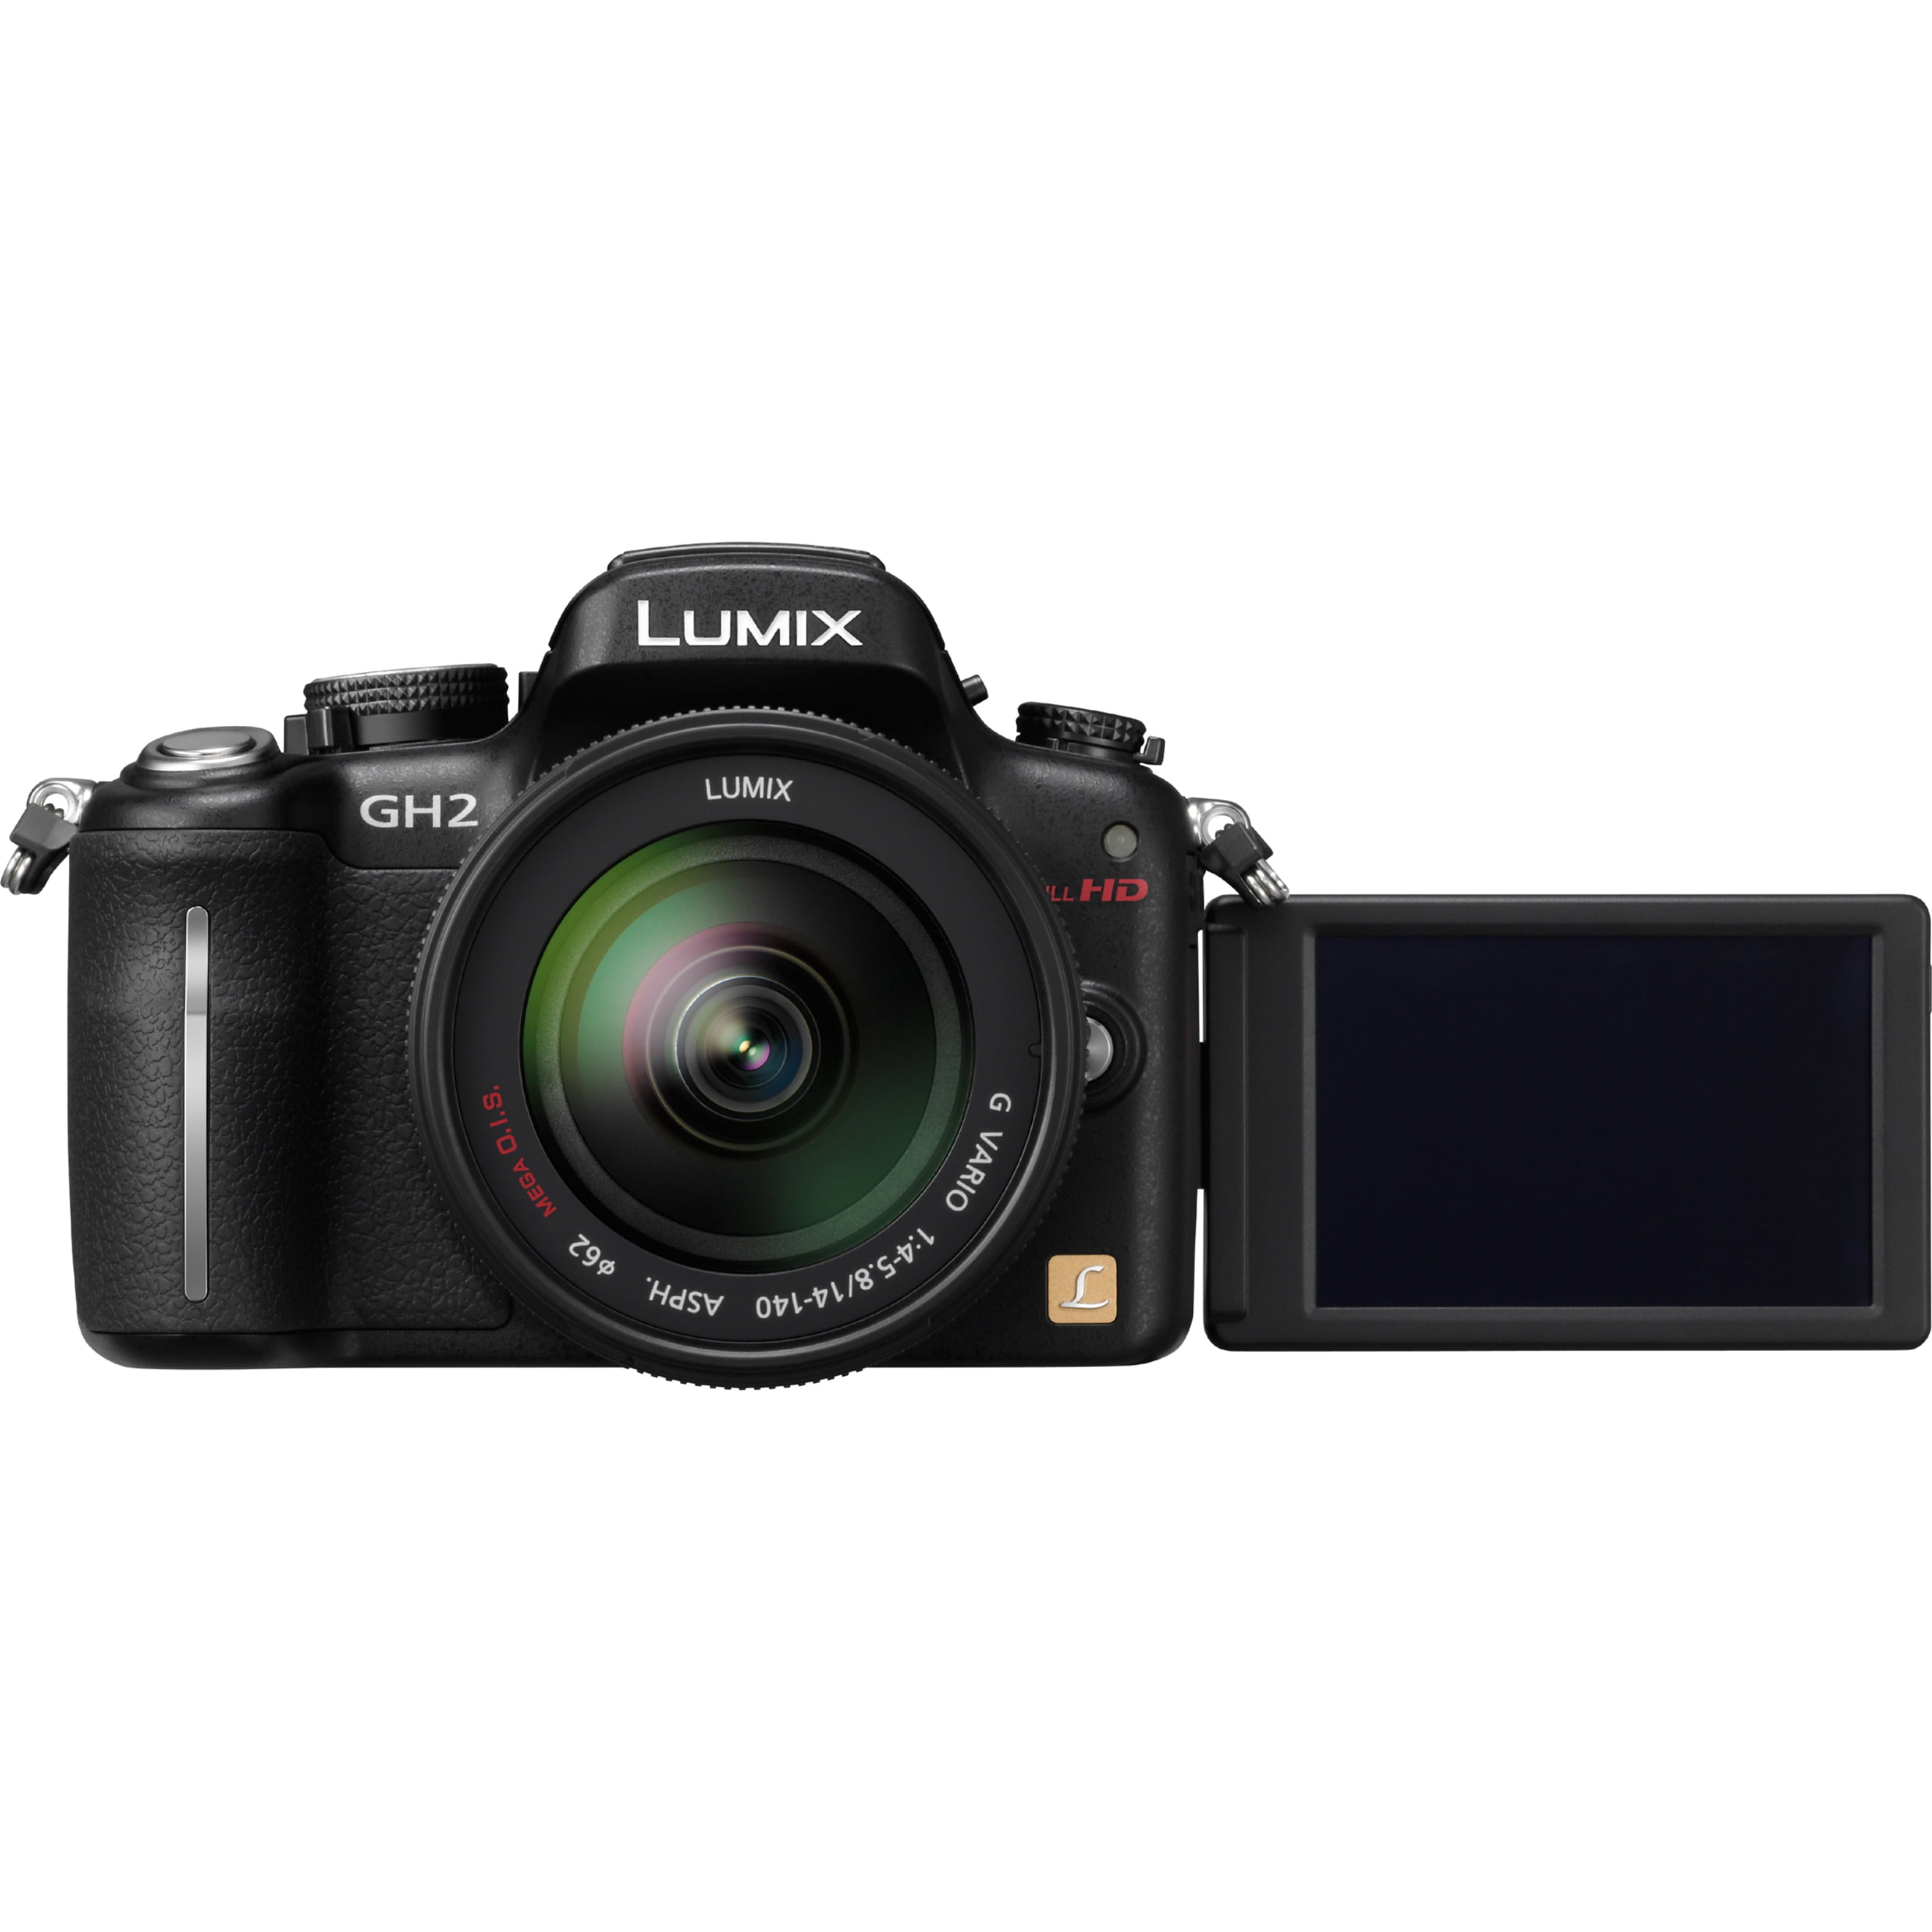 Gemengd Voel me slecht verlegen Panasonic Lumix DMC-GH2 16.1 Megapixel Mirrorless Camera with Lens, 0.55",  5.51", Black - Walmart.com